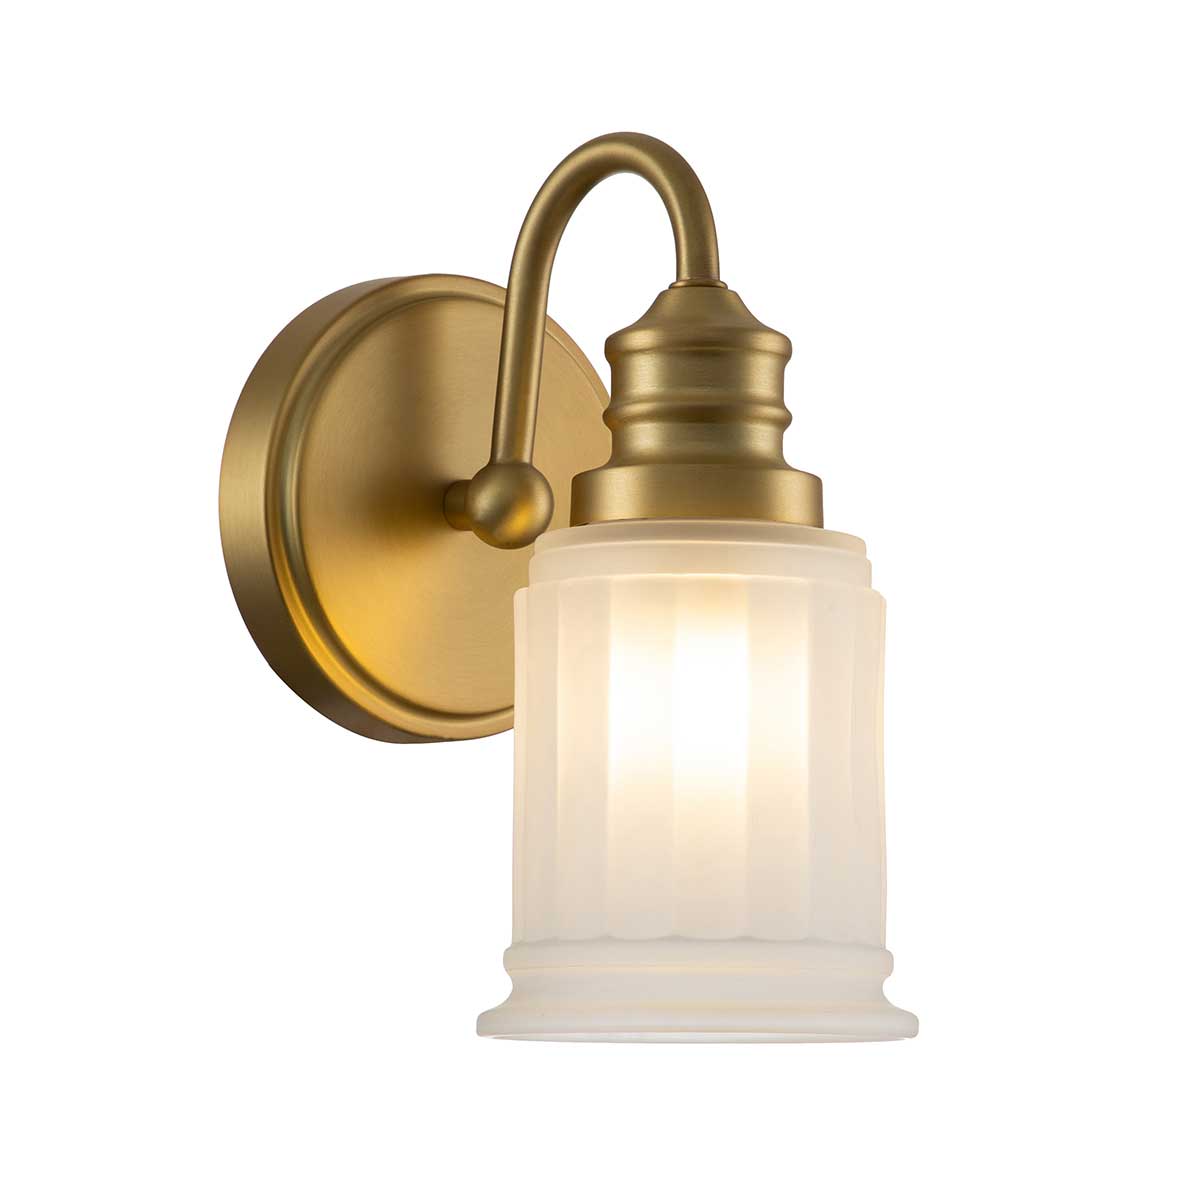 Swell 1Lt Bathroom Wall Light IP44 – Polished Chrome/ Brushed Brass